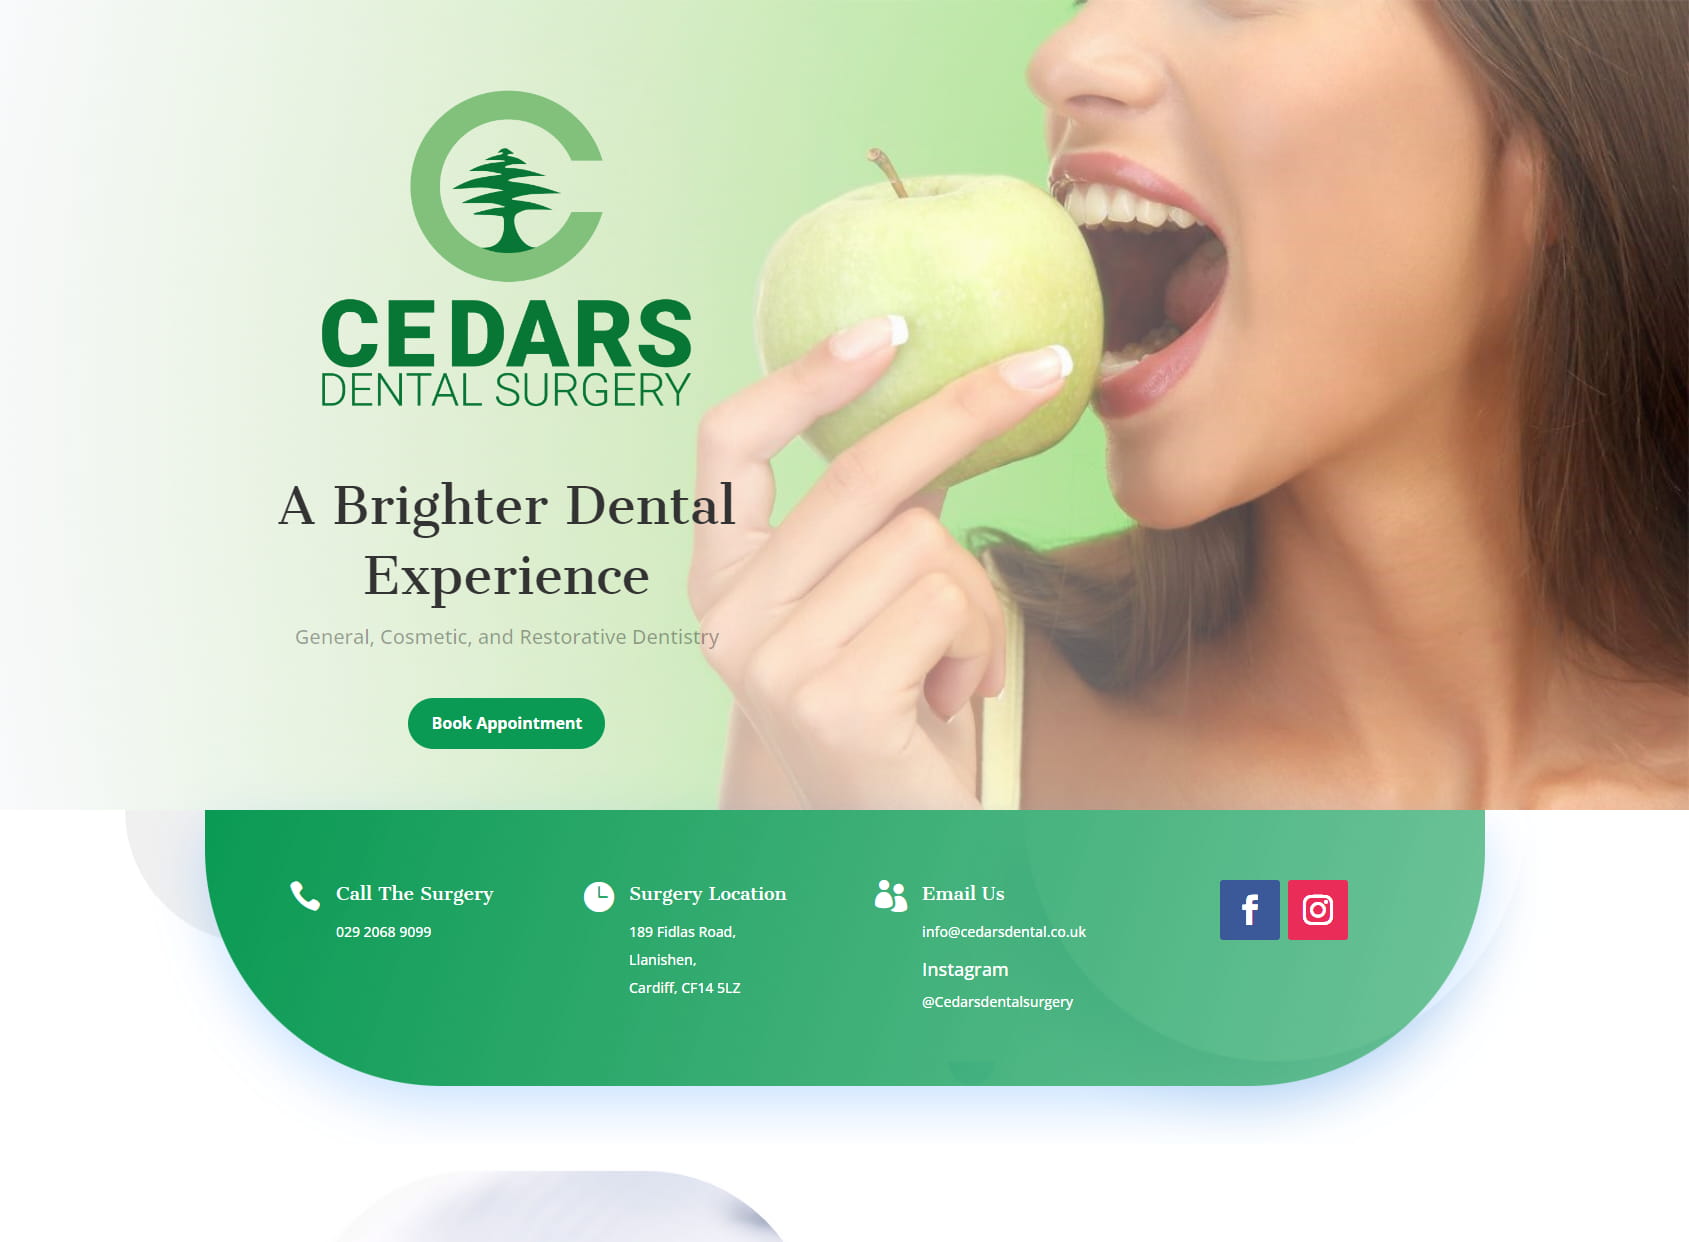 Cedars Dental Surgery Cardiff